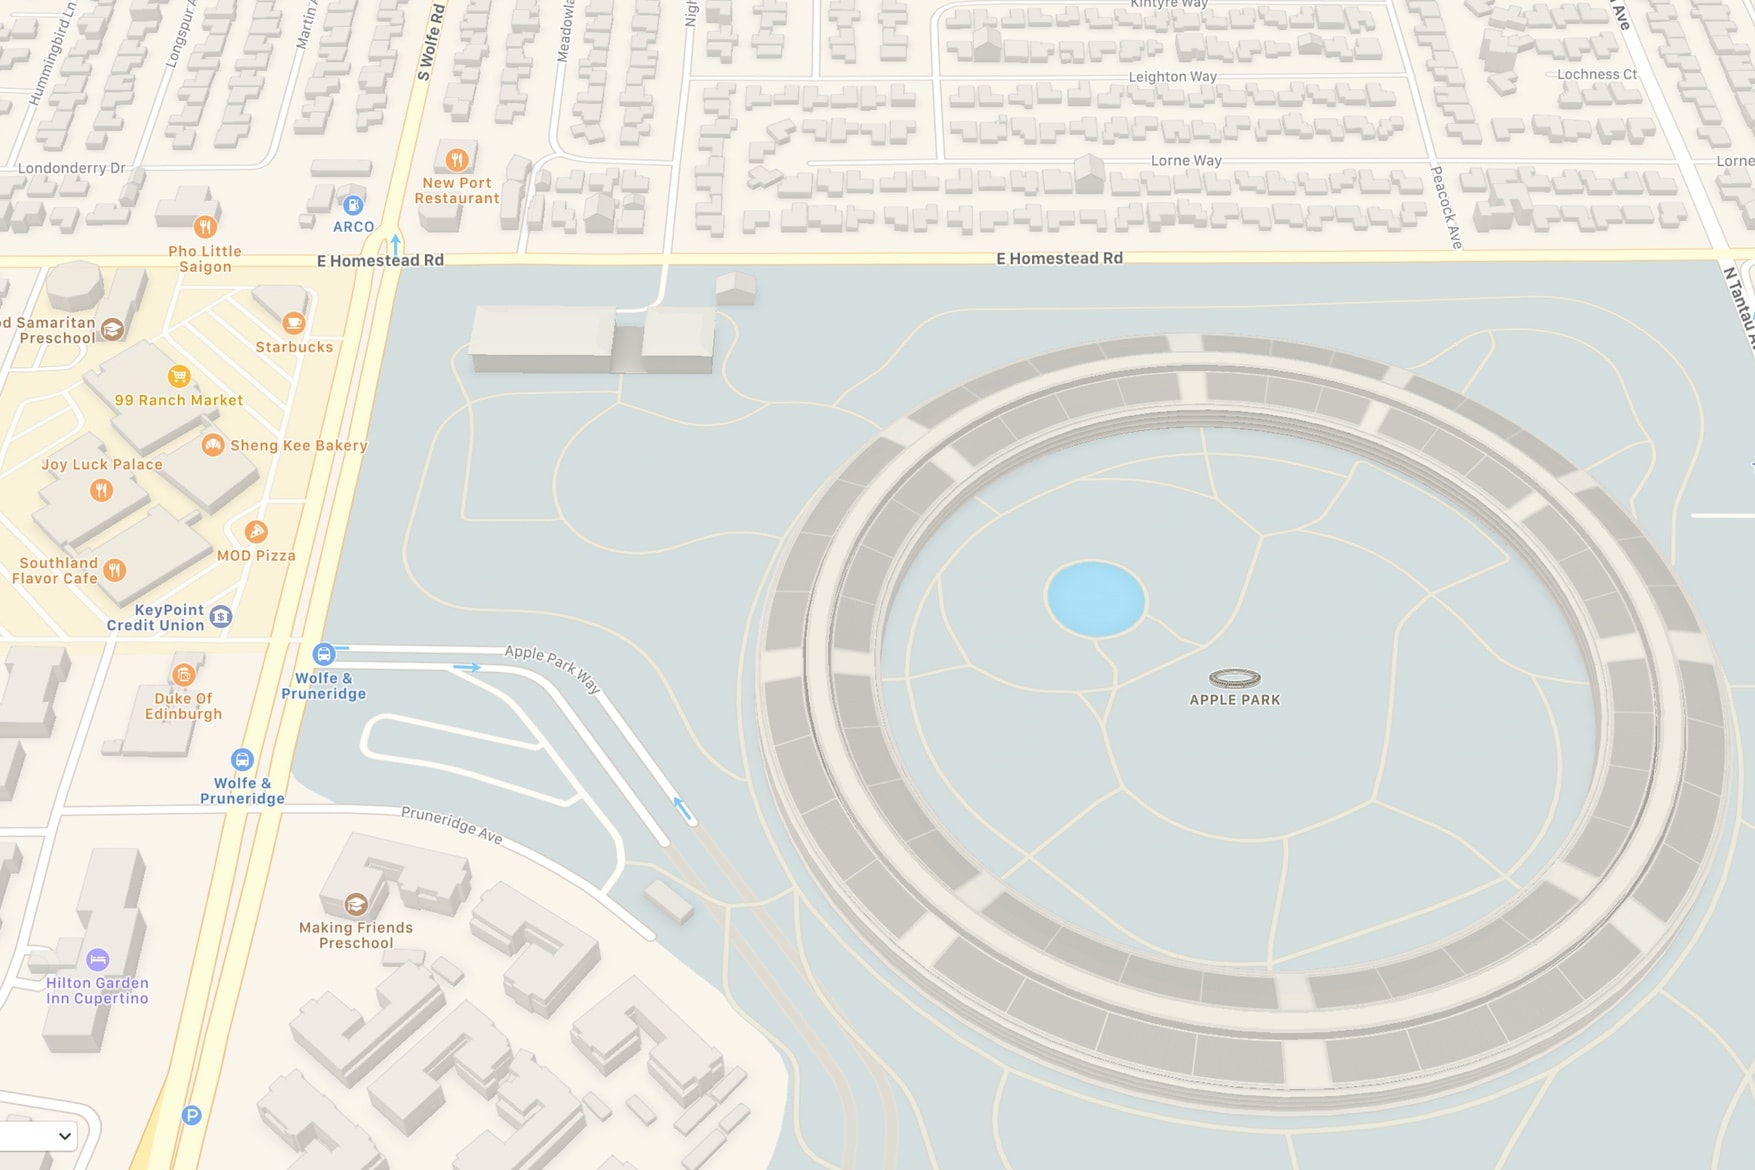 Apple Map 更新曝光 Apple Park 第一手鳥瞰地圖